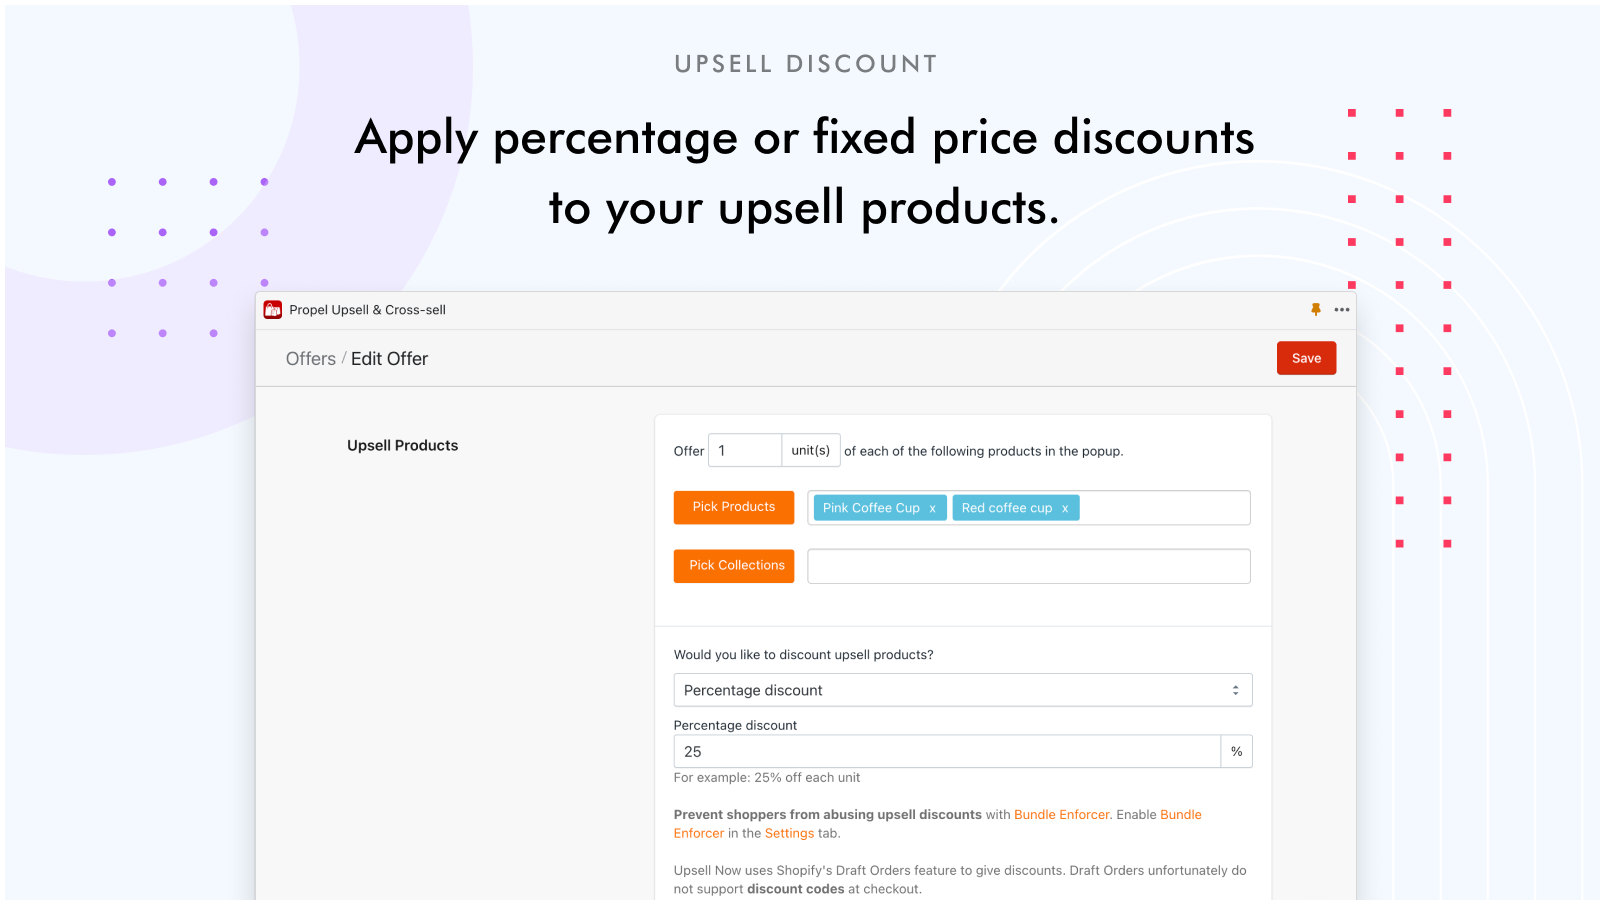 Upsell discounts